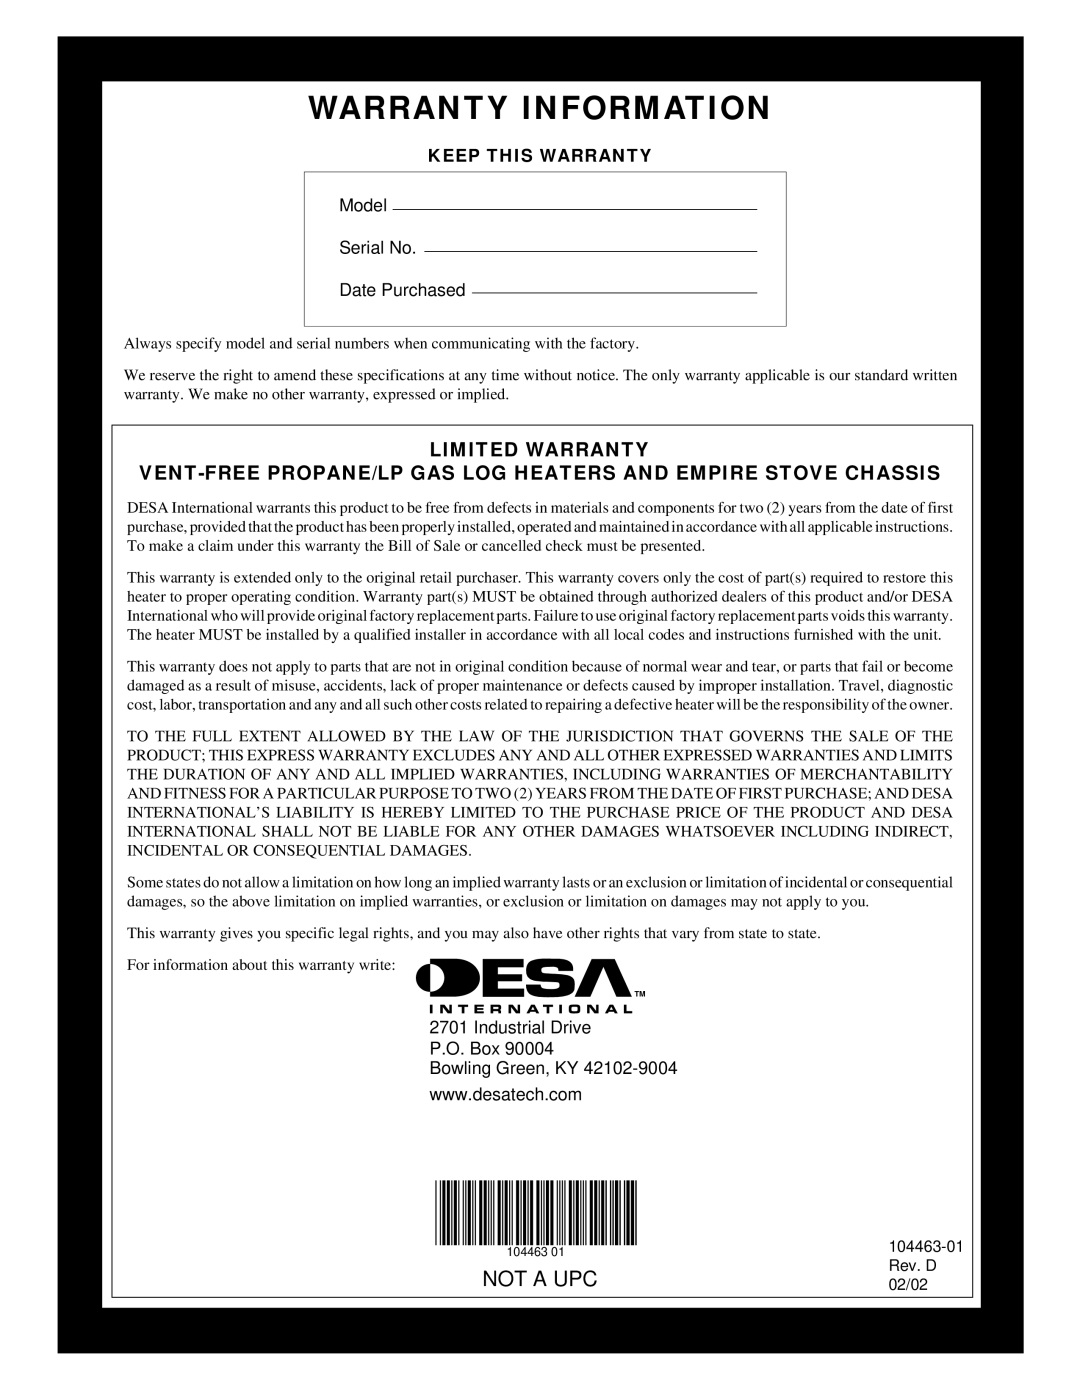 Desa Tech SL30NT installation manual Warranty Information, Not A Upc, Model Serial No Date Purchased 